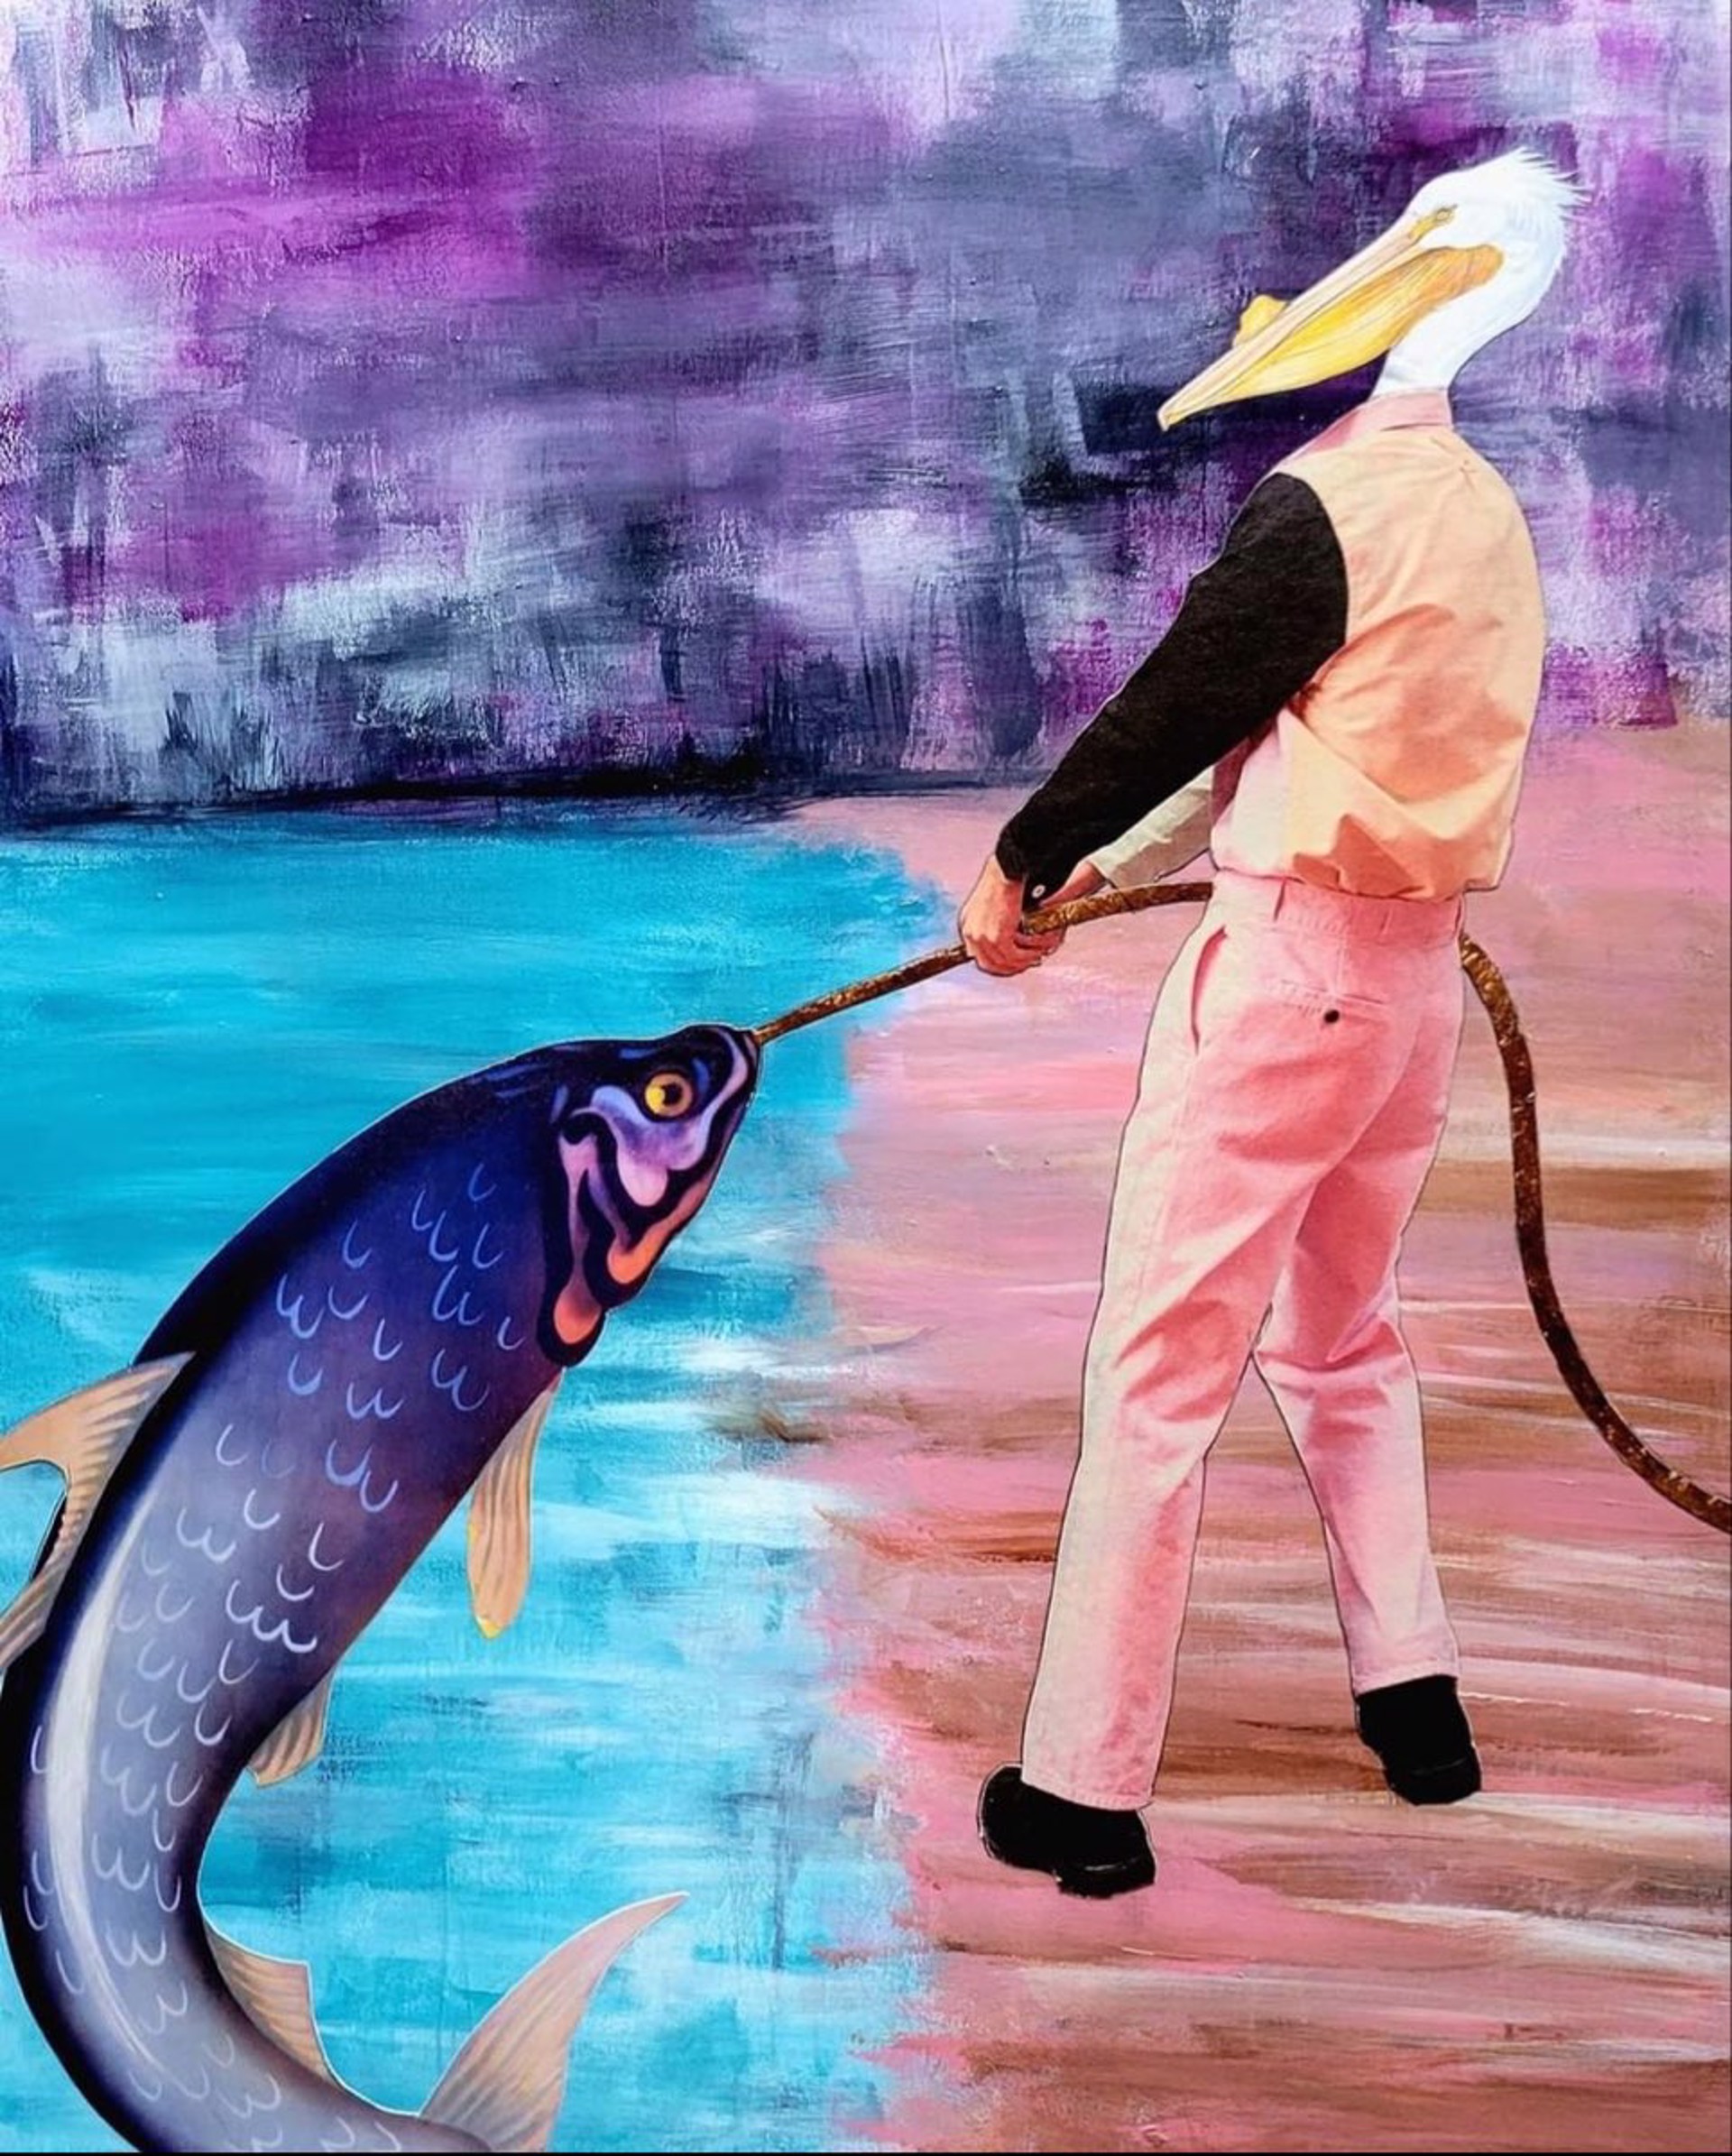 The Fish Wrangler by Jim Laugelli